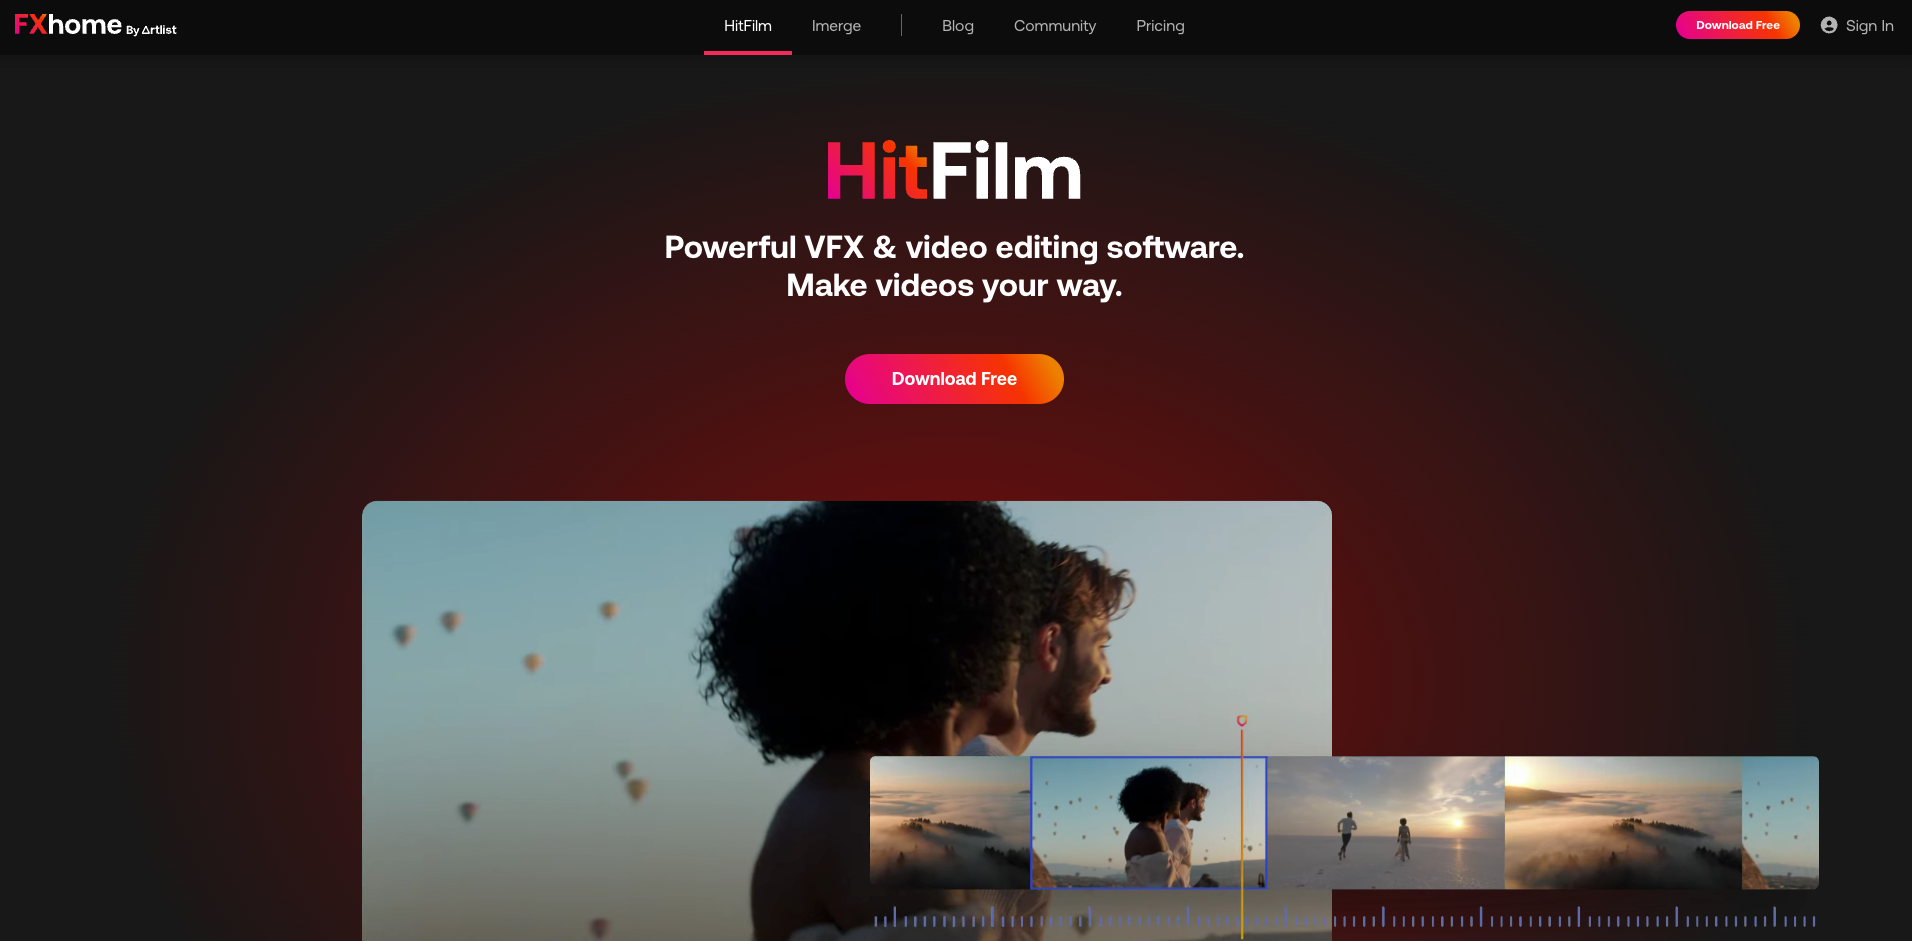 A screenshot of the HitFilm homepage